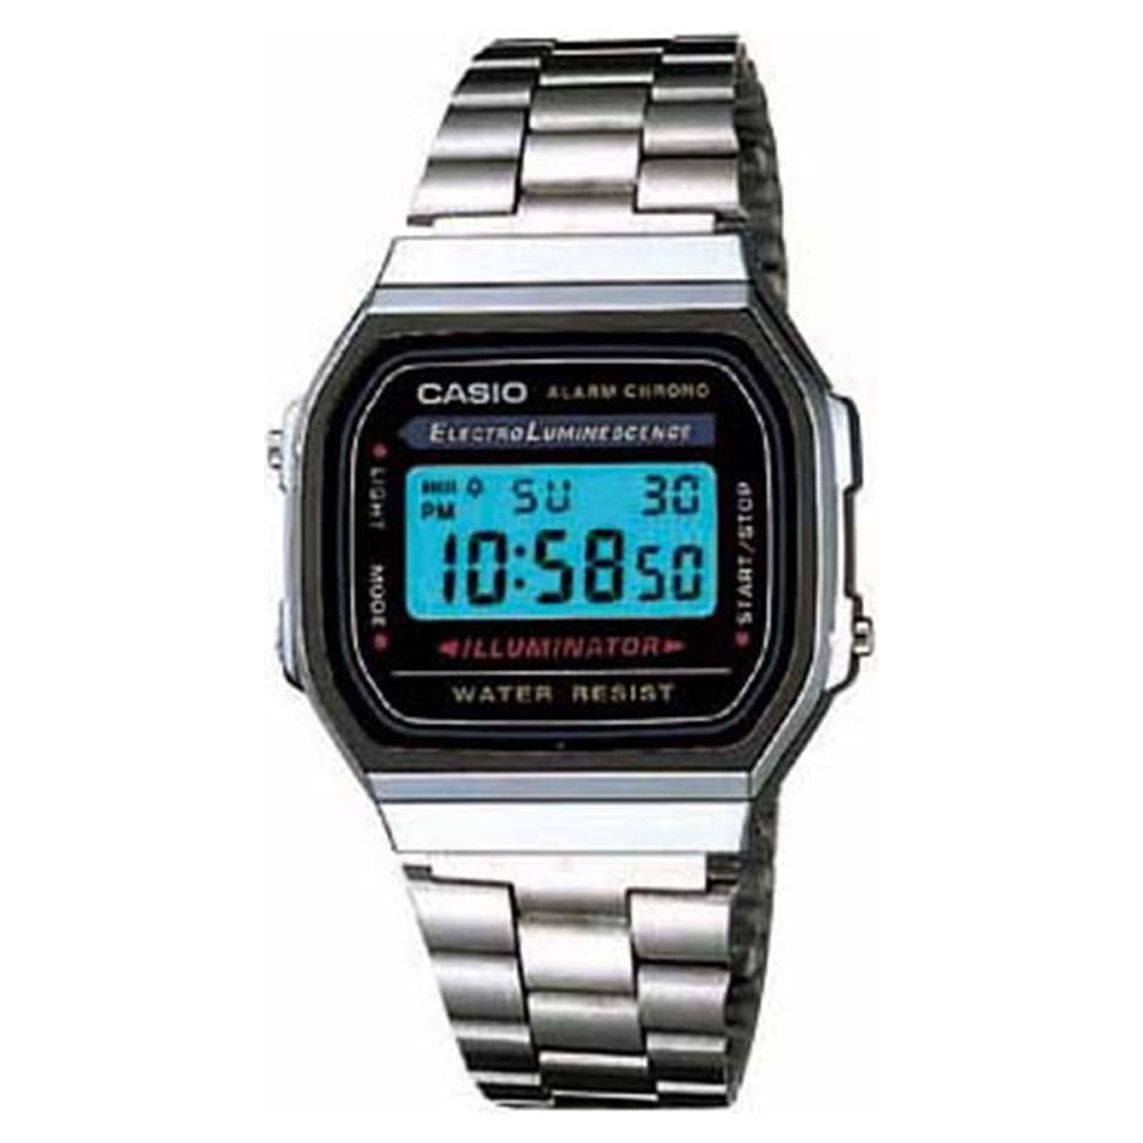 Casio Men's Classic Digital Illuminator Watch A168WA-1 